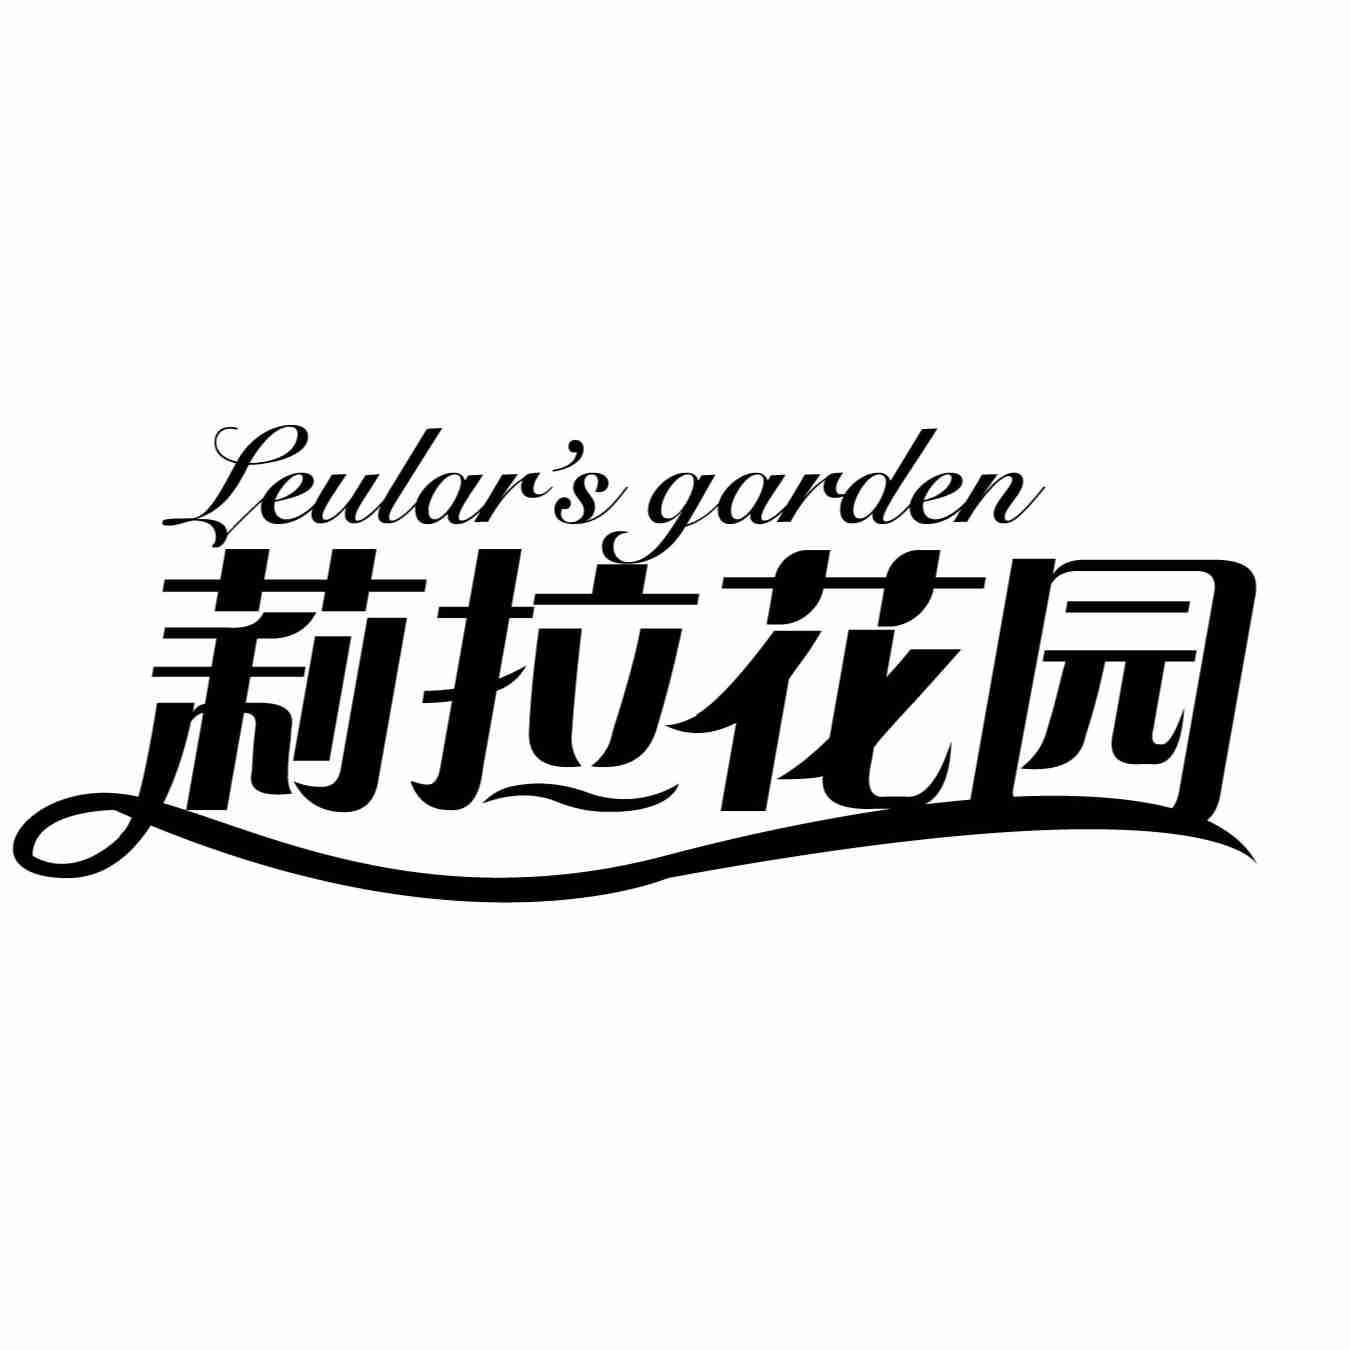 莉拉花园 LEULAR'S GARDEN